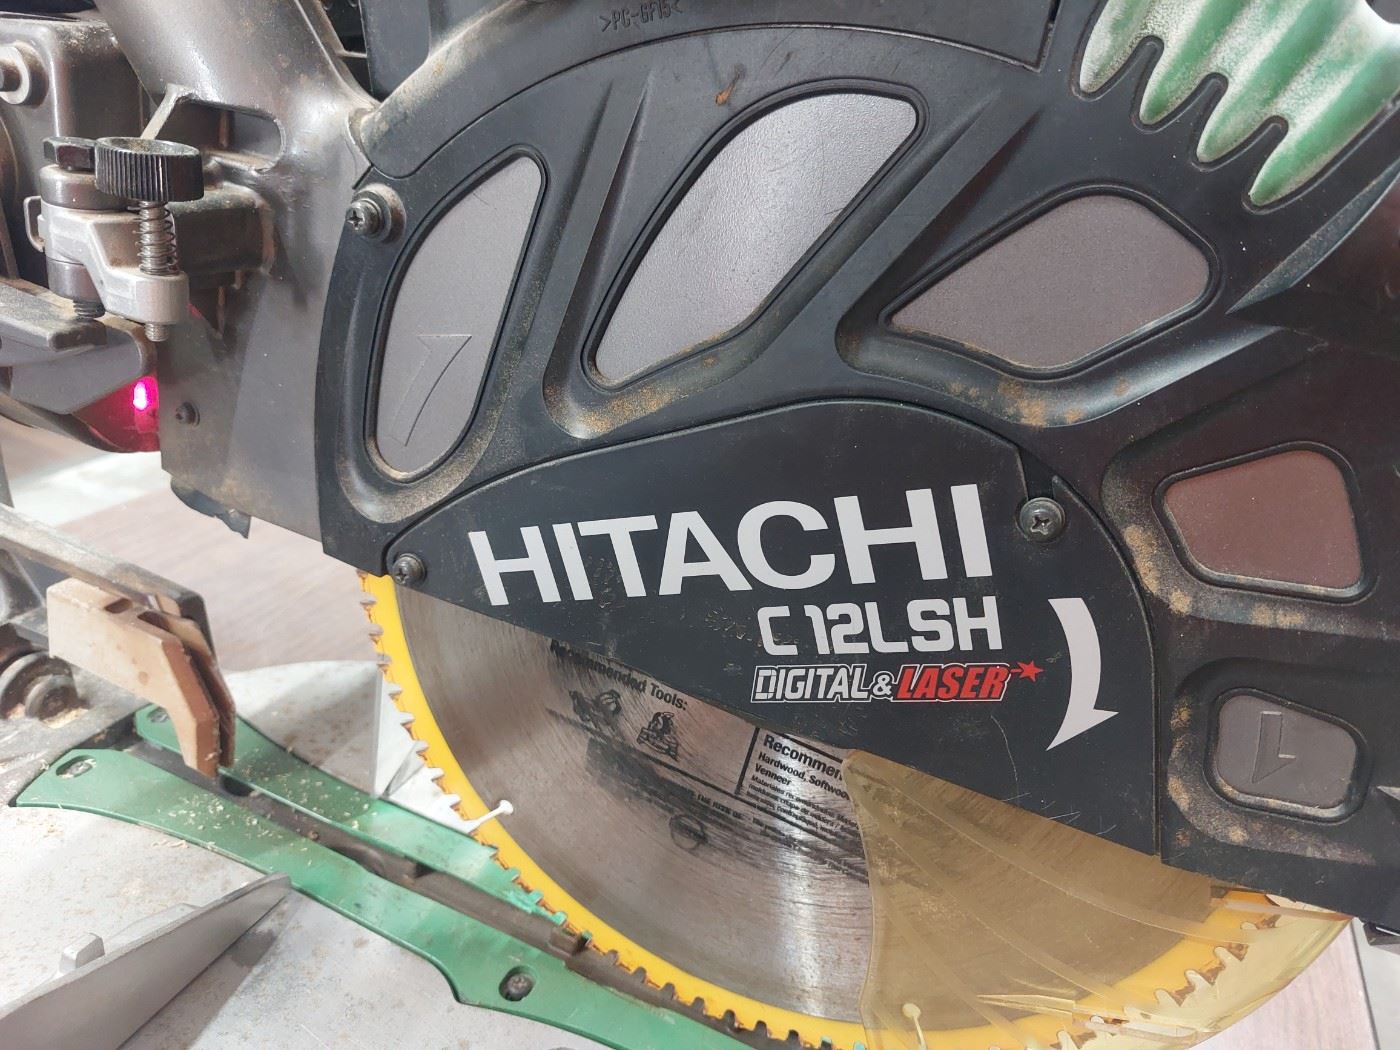 Hitachi C12LSH 12: Sliding Dual Compound Miter Saw